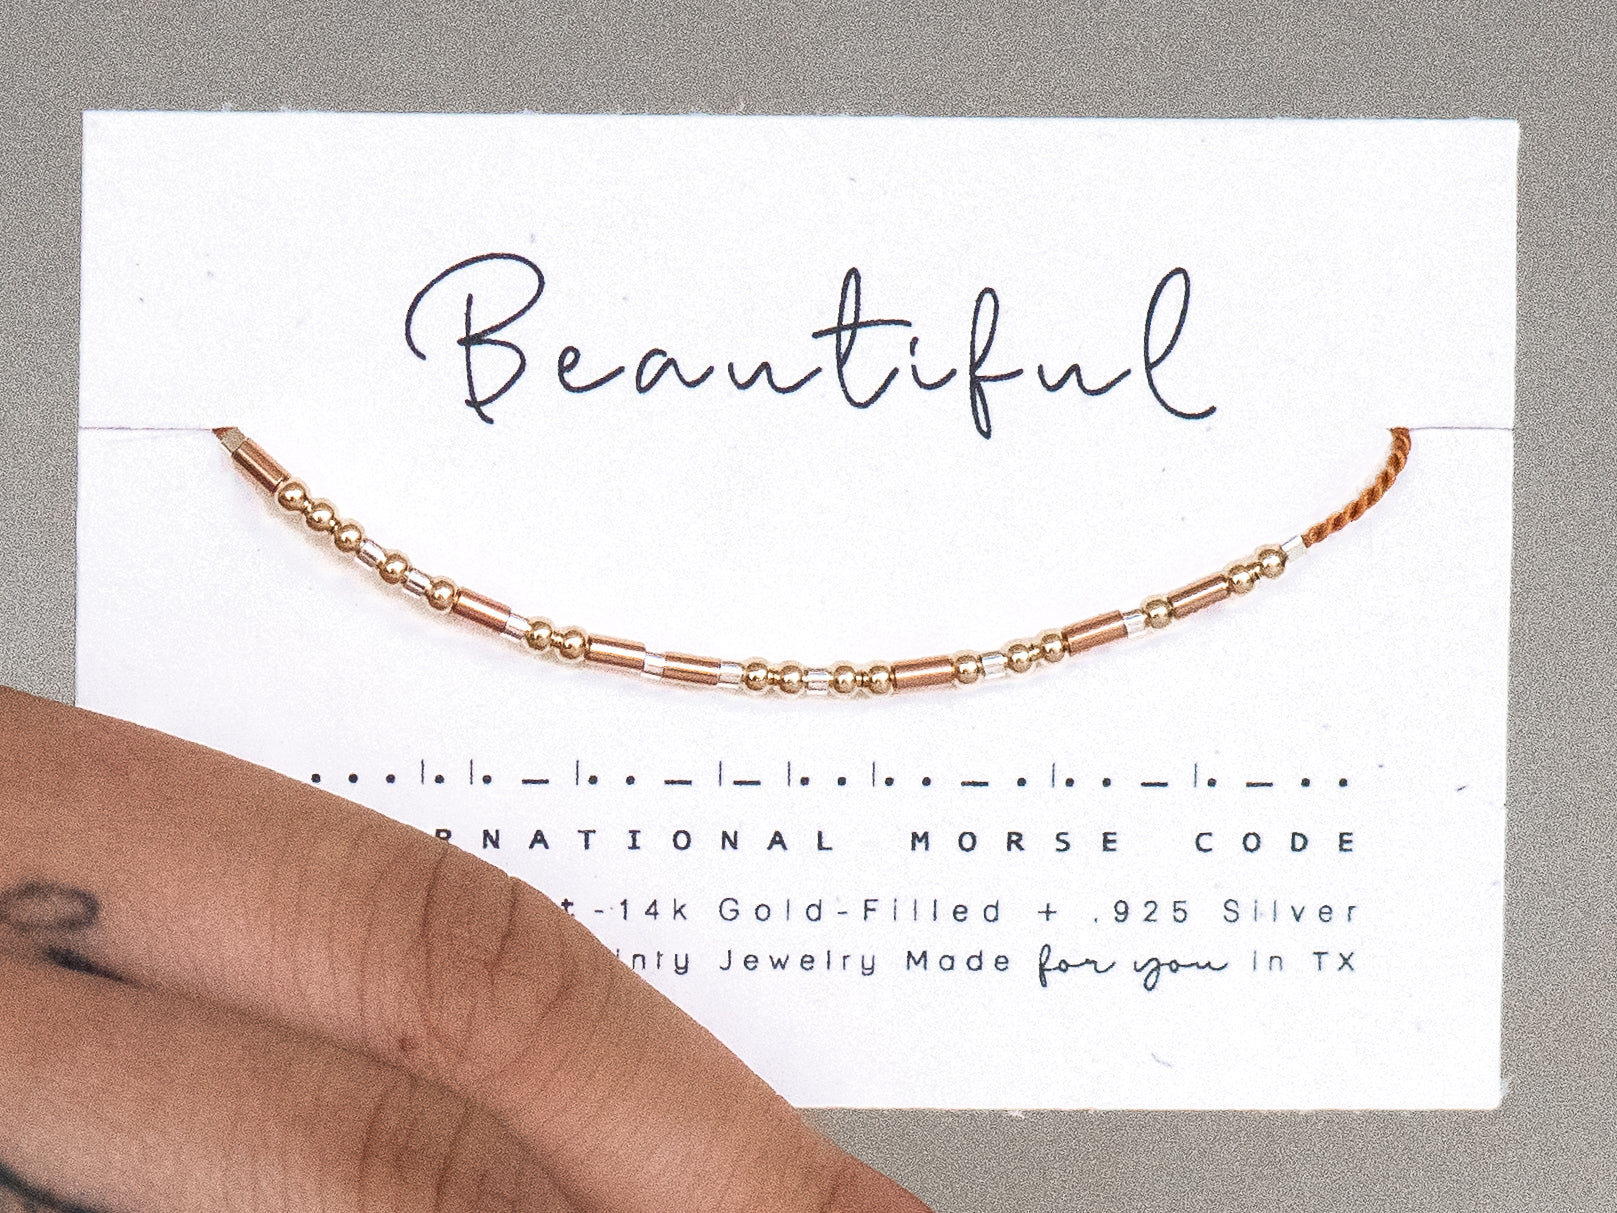 beautiful-morse-code-bracelet-morseanddainty-com-1.jpg